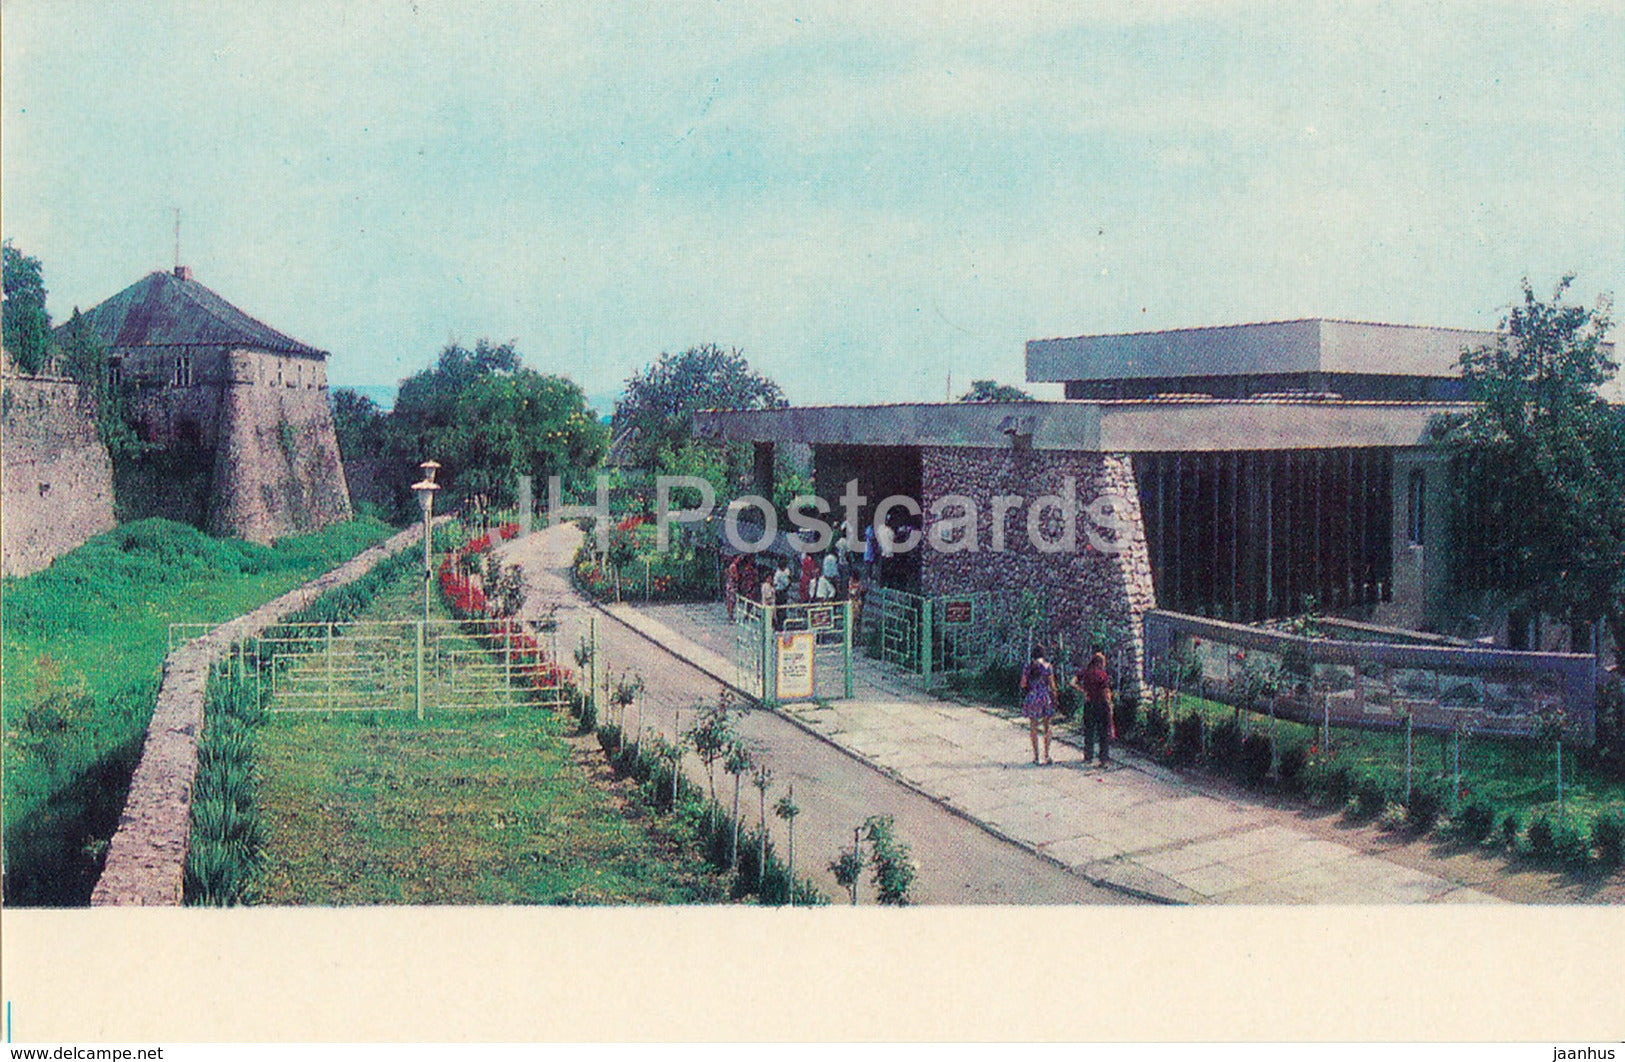 Uzhhorod - Uzhgorod - Transcarpathian Museum of Folk Architecture and Life - 1978 - Ukraine USSR - unused - JH Postcards